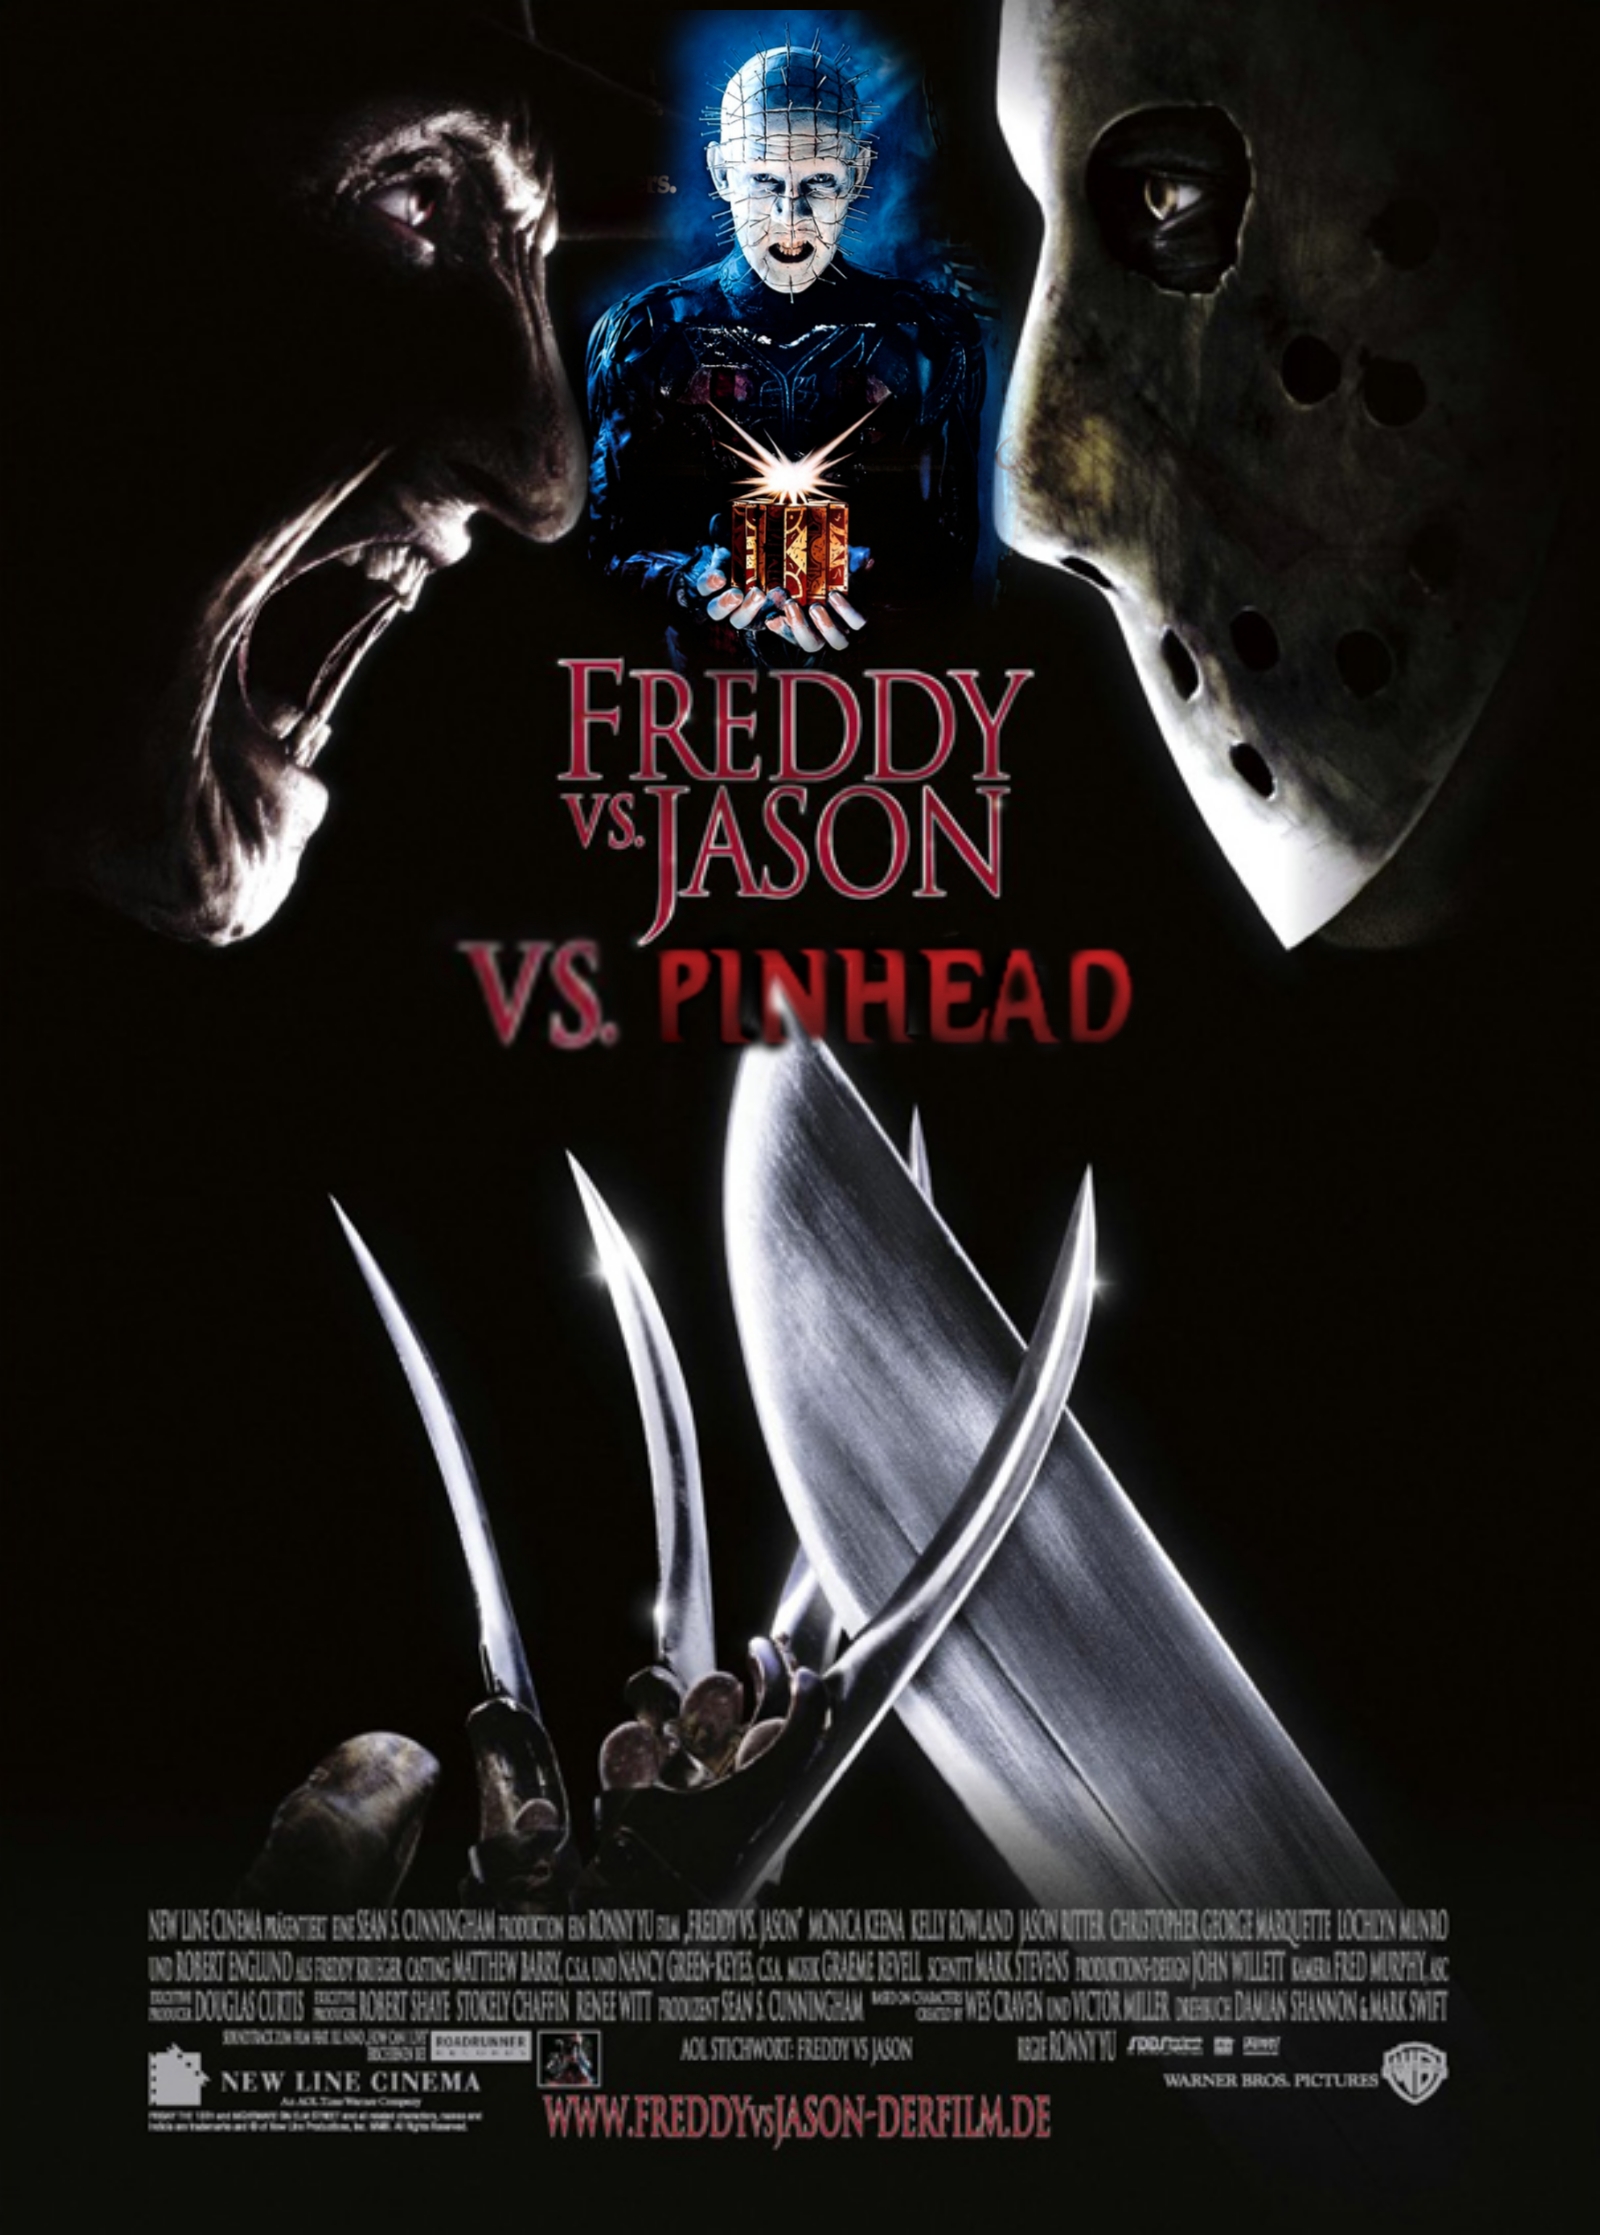 Freddy Vs Jason Vs Pinhead1987 By 91w On Deviantart